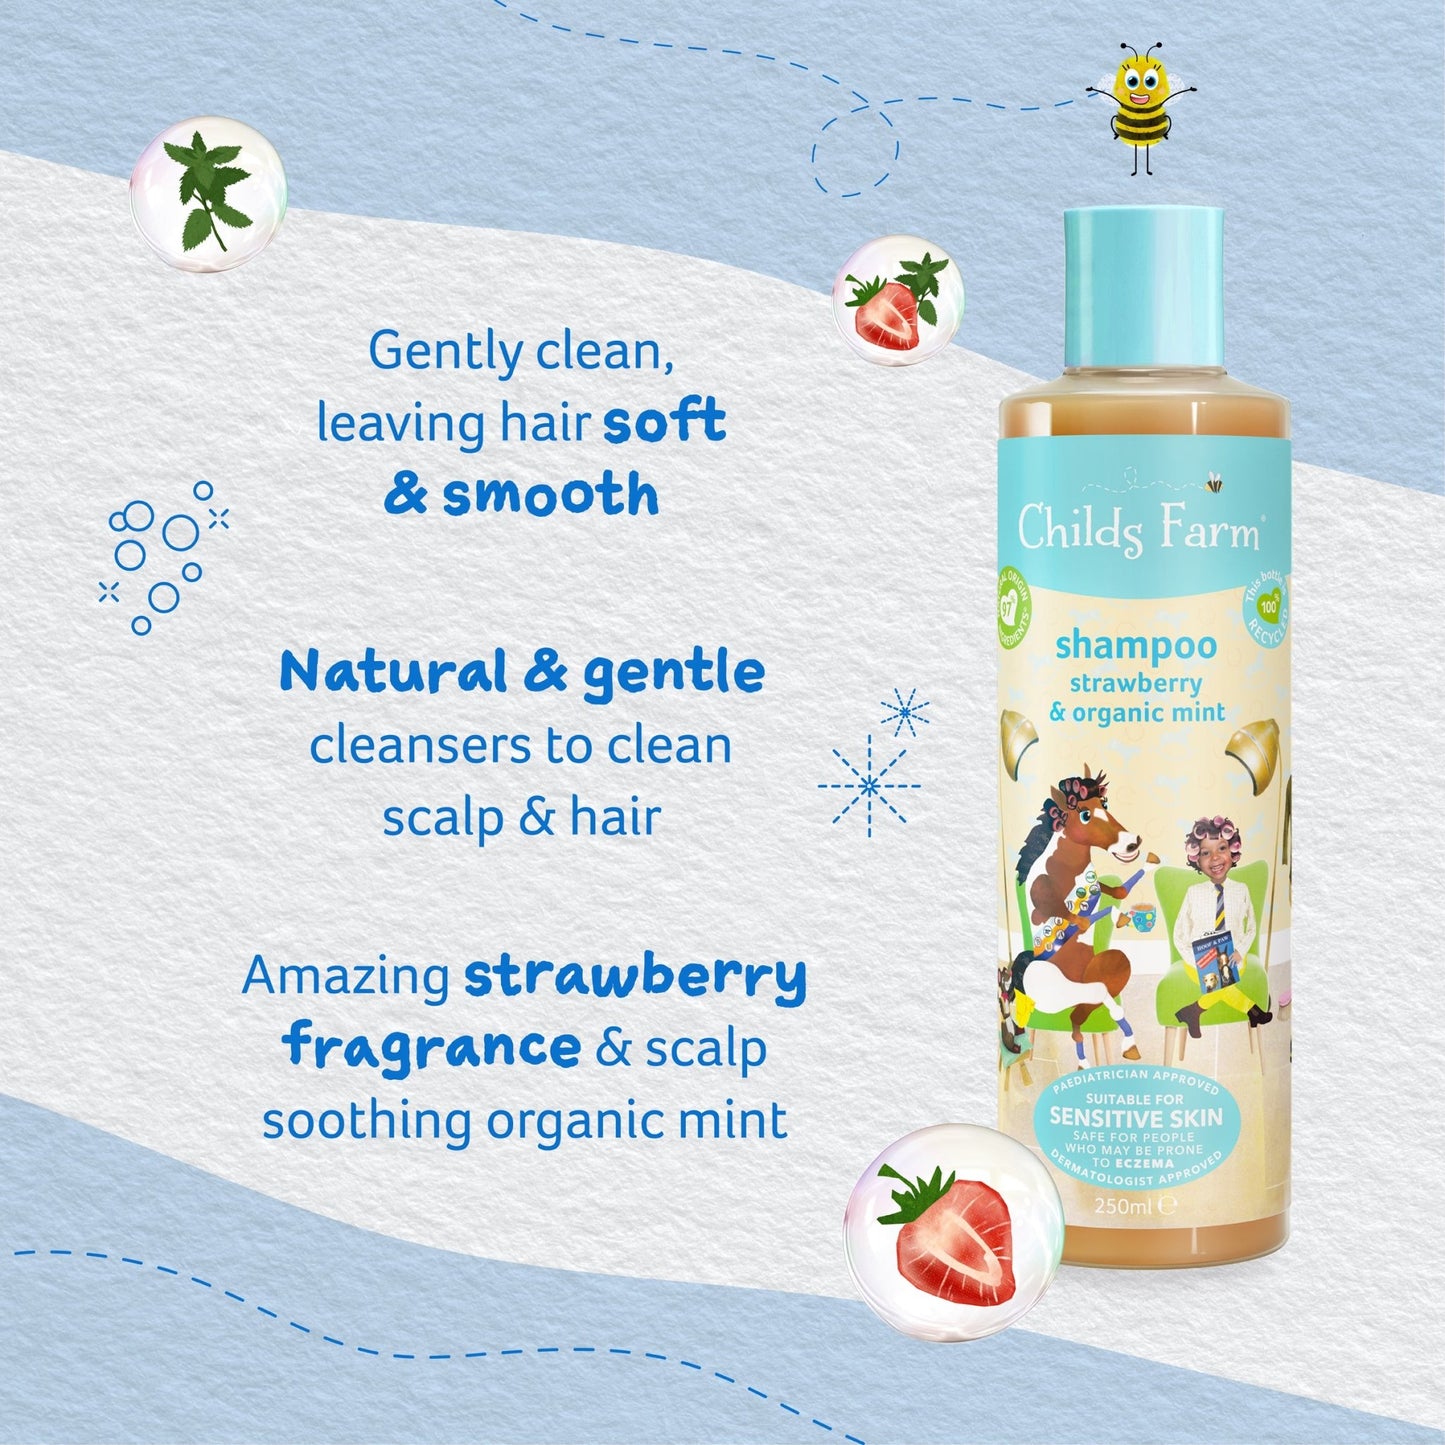 [STAFF] shampoo strawberry & organic mint